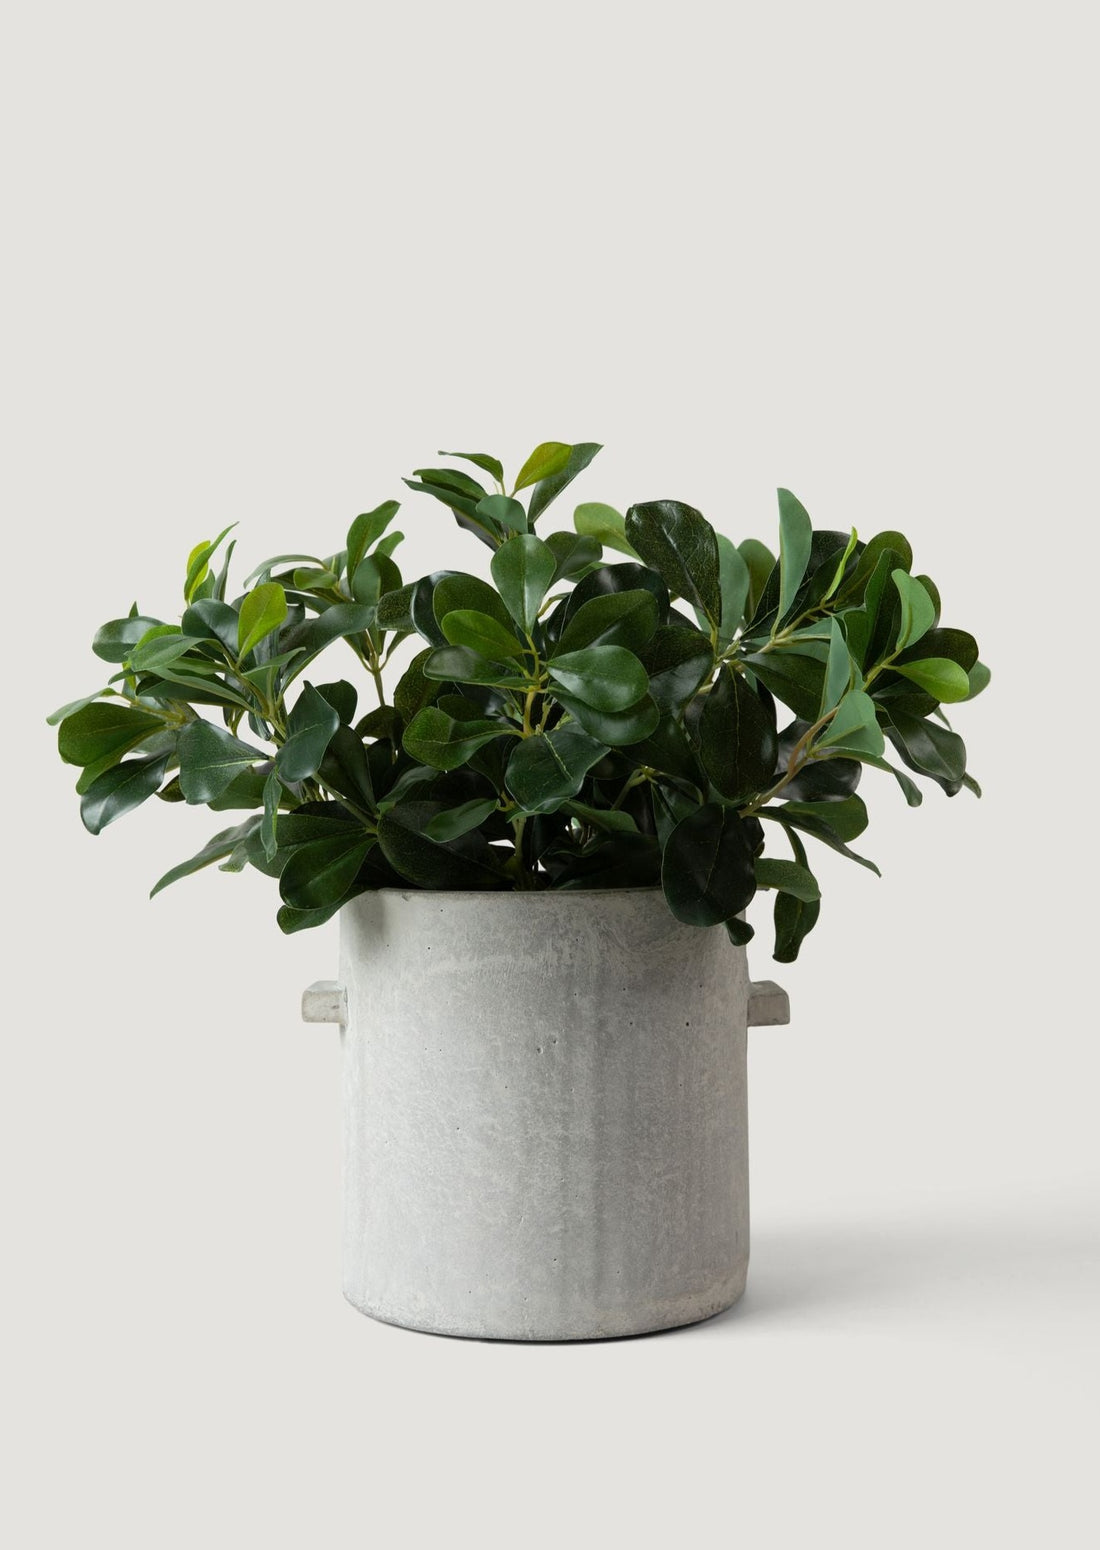 Faux Wax Privet Plant Styled in Serax Concrete Pot